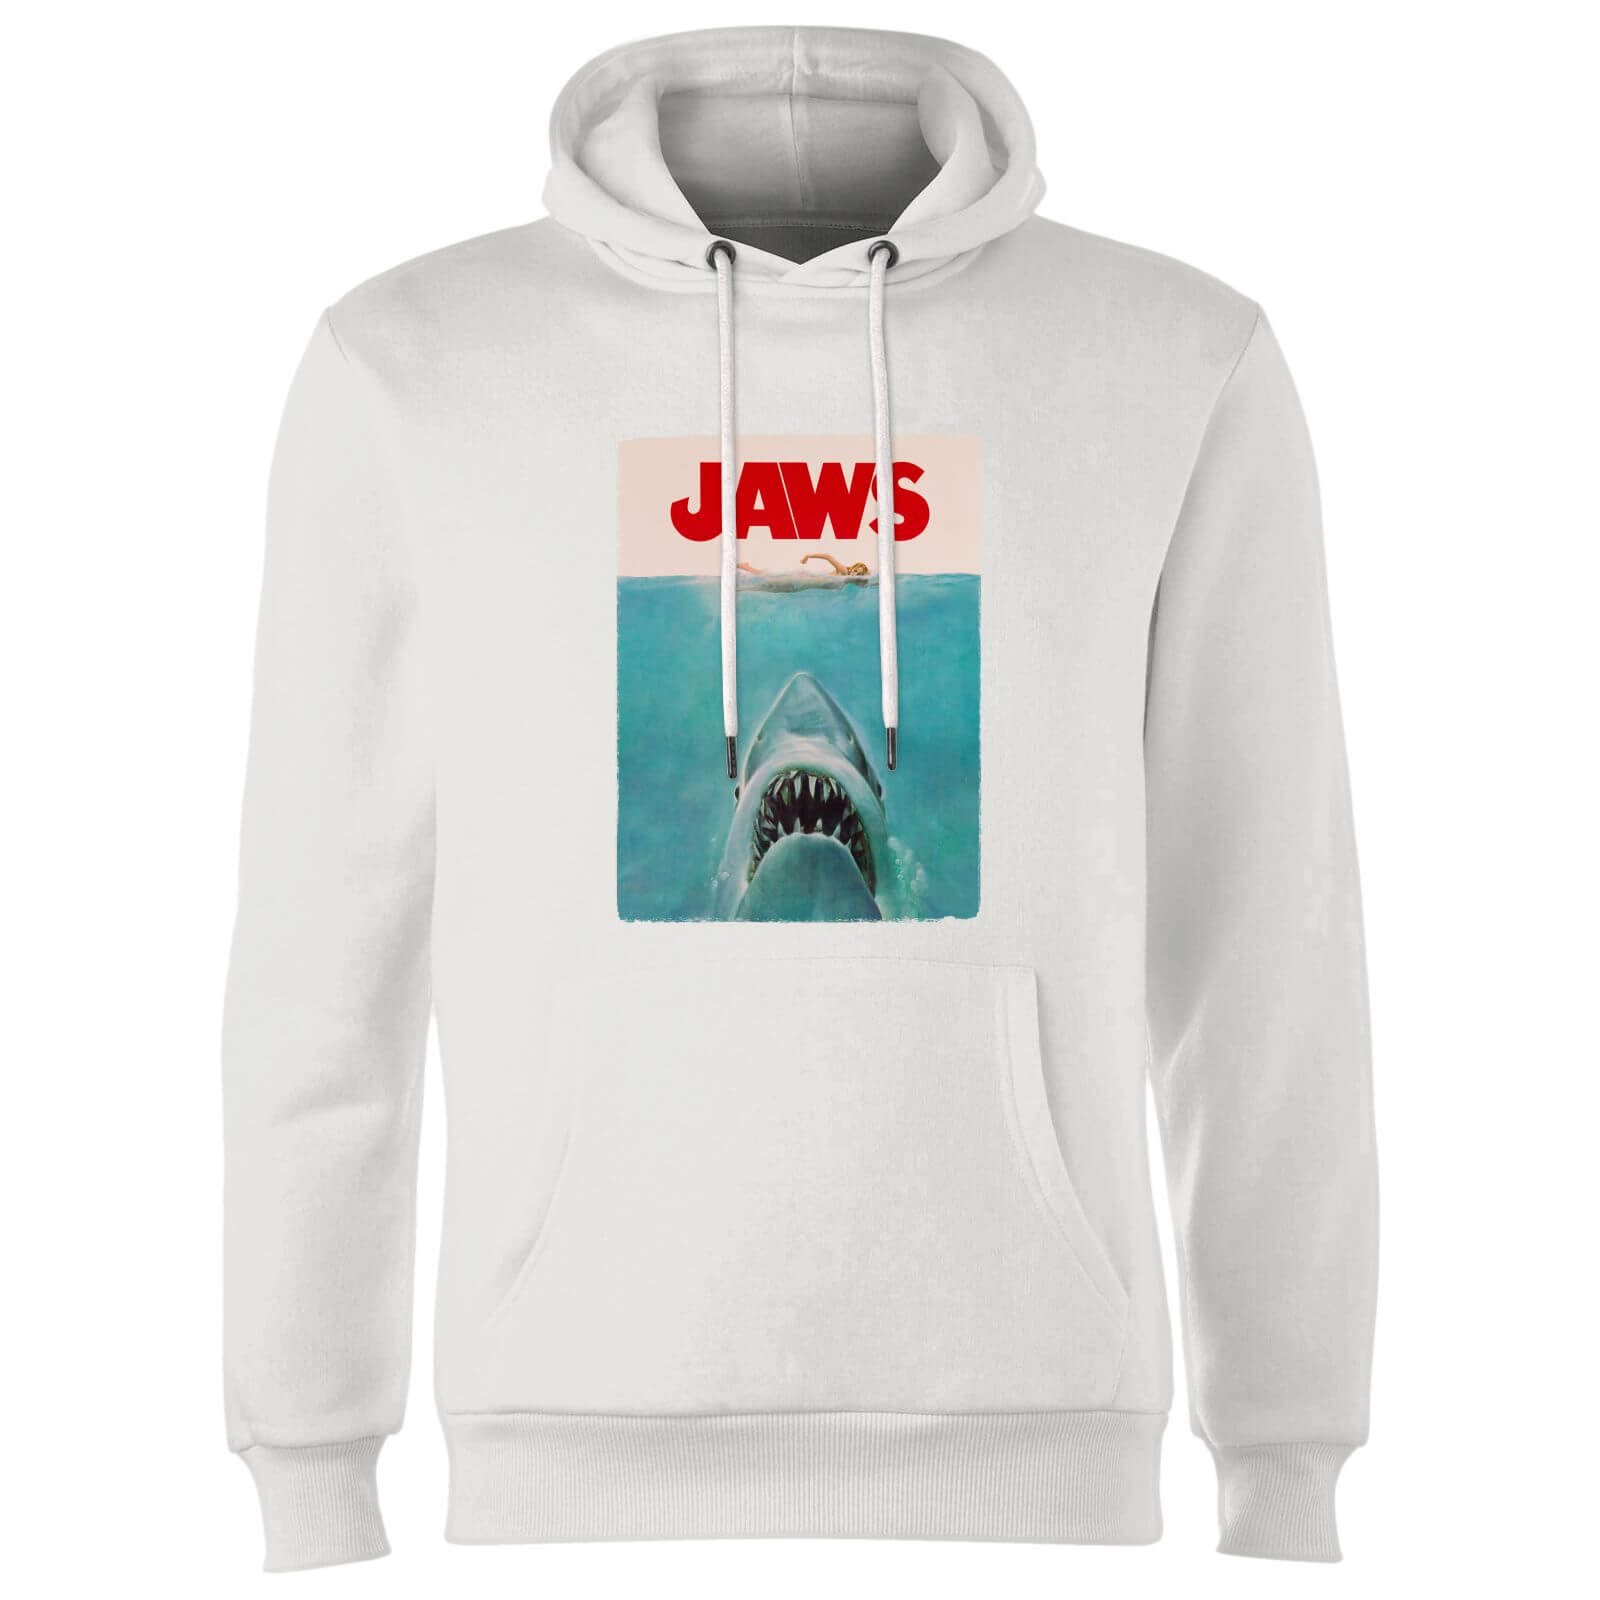 Universal Jaws Classic Poster Hoodie - White - S - White